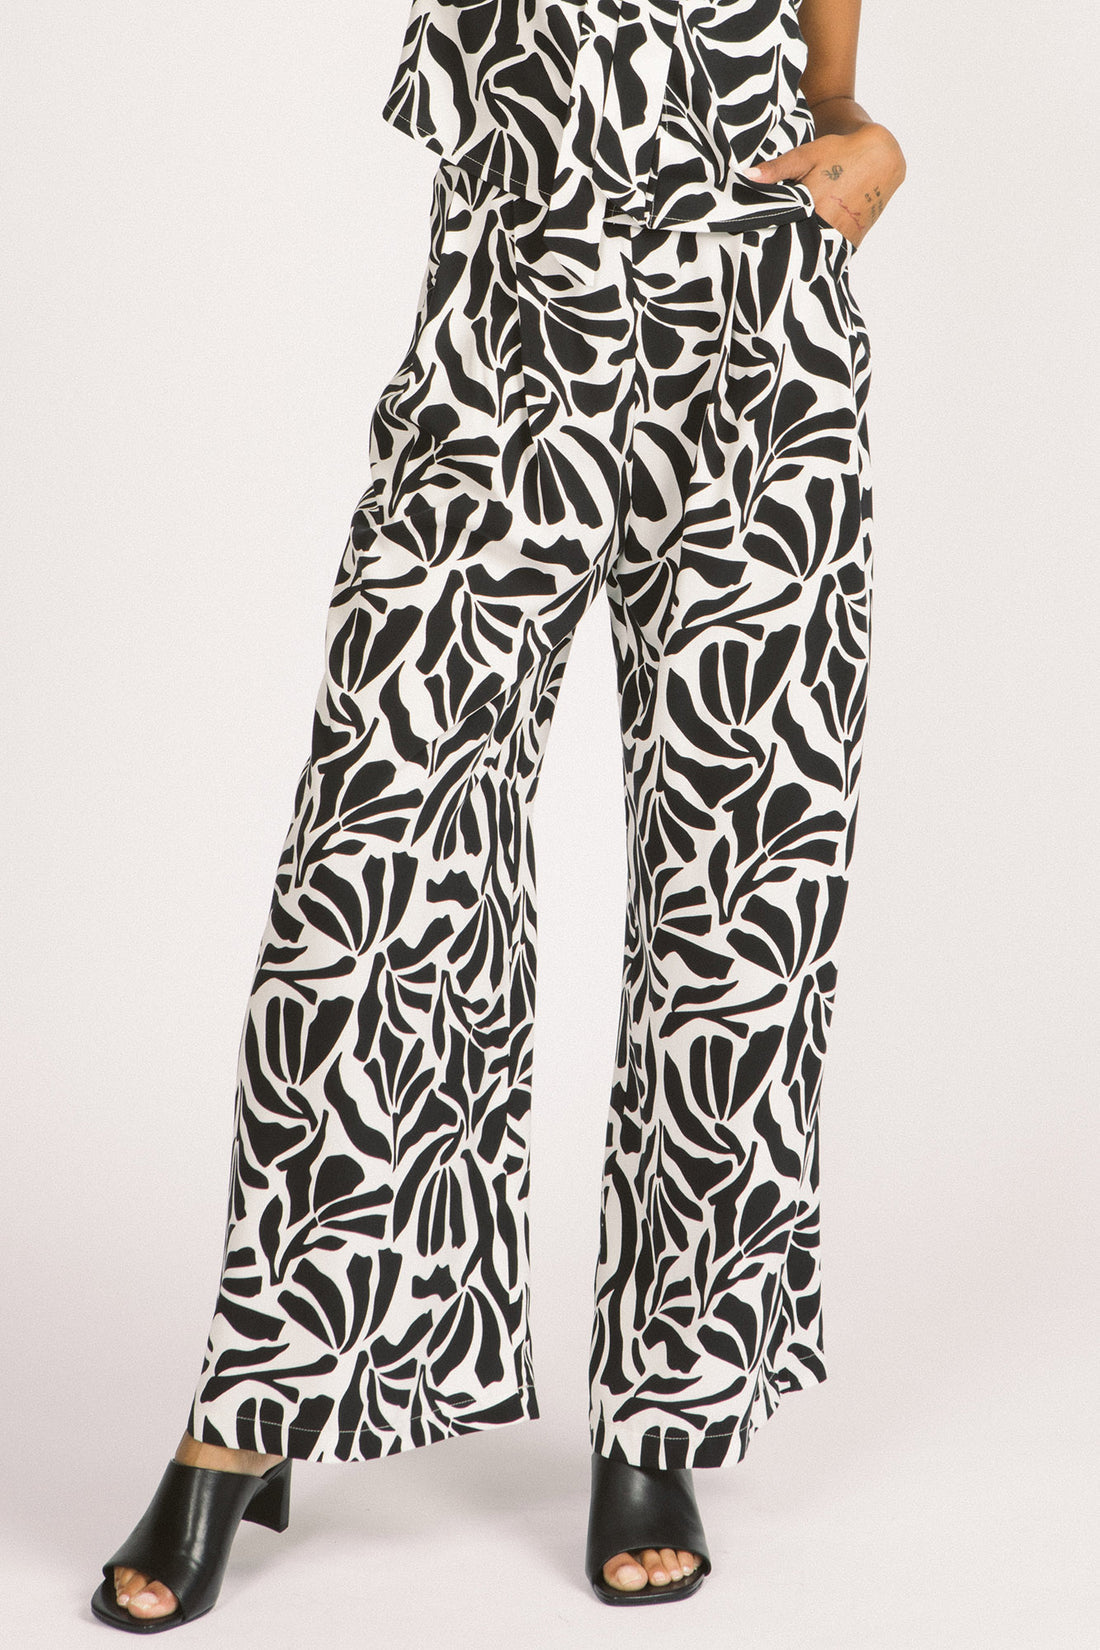 Darcy Pants by Allison Wonderland, Zebra Leaf Print, wide leg, elastic waist, pleats, eco-fabric, Lenzing ecovero viscose, sizes 2-12, made in Vancouver 